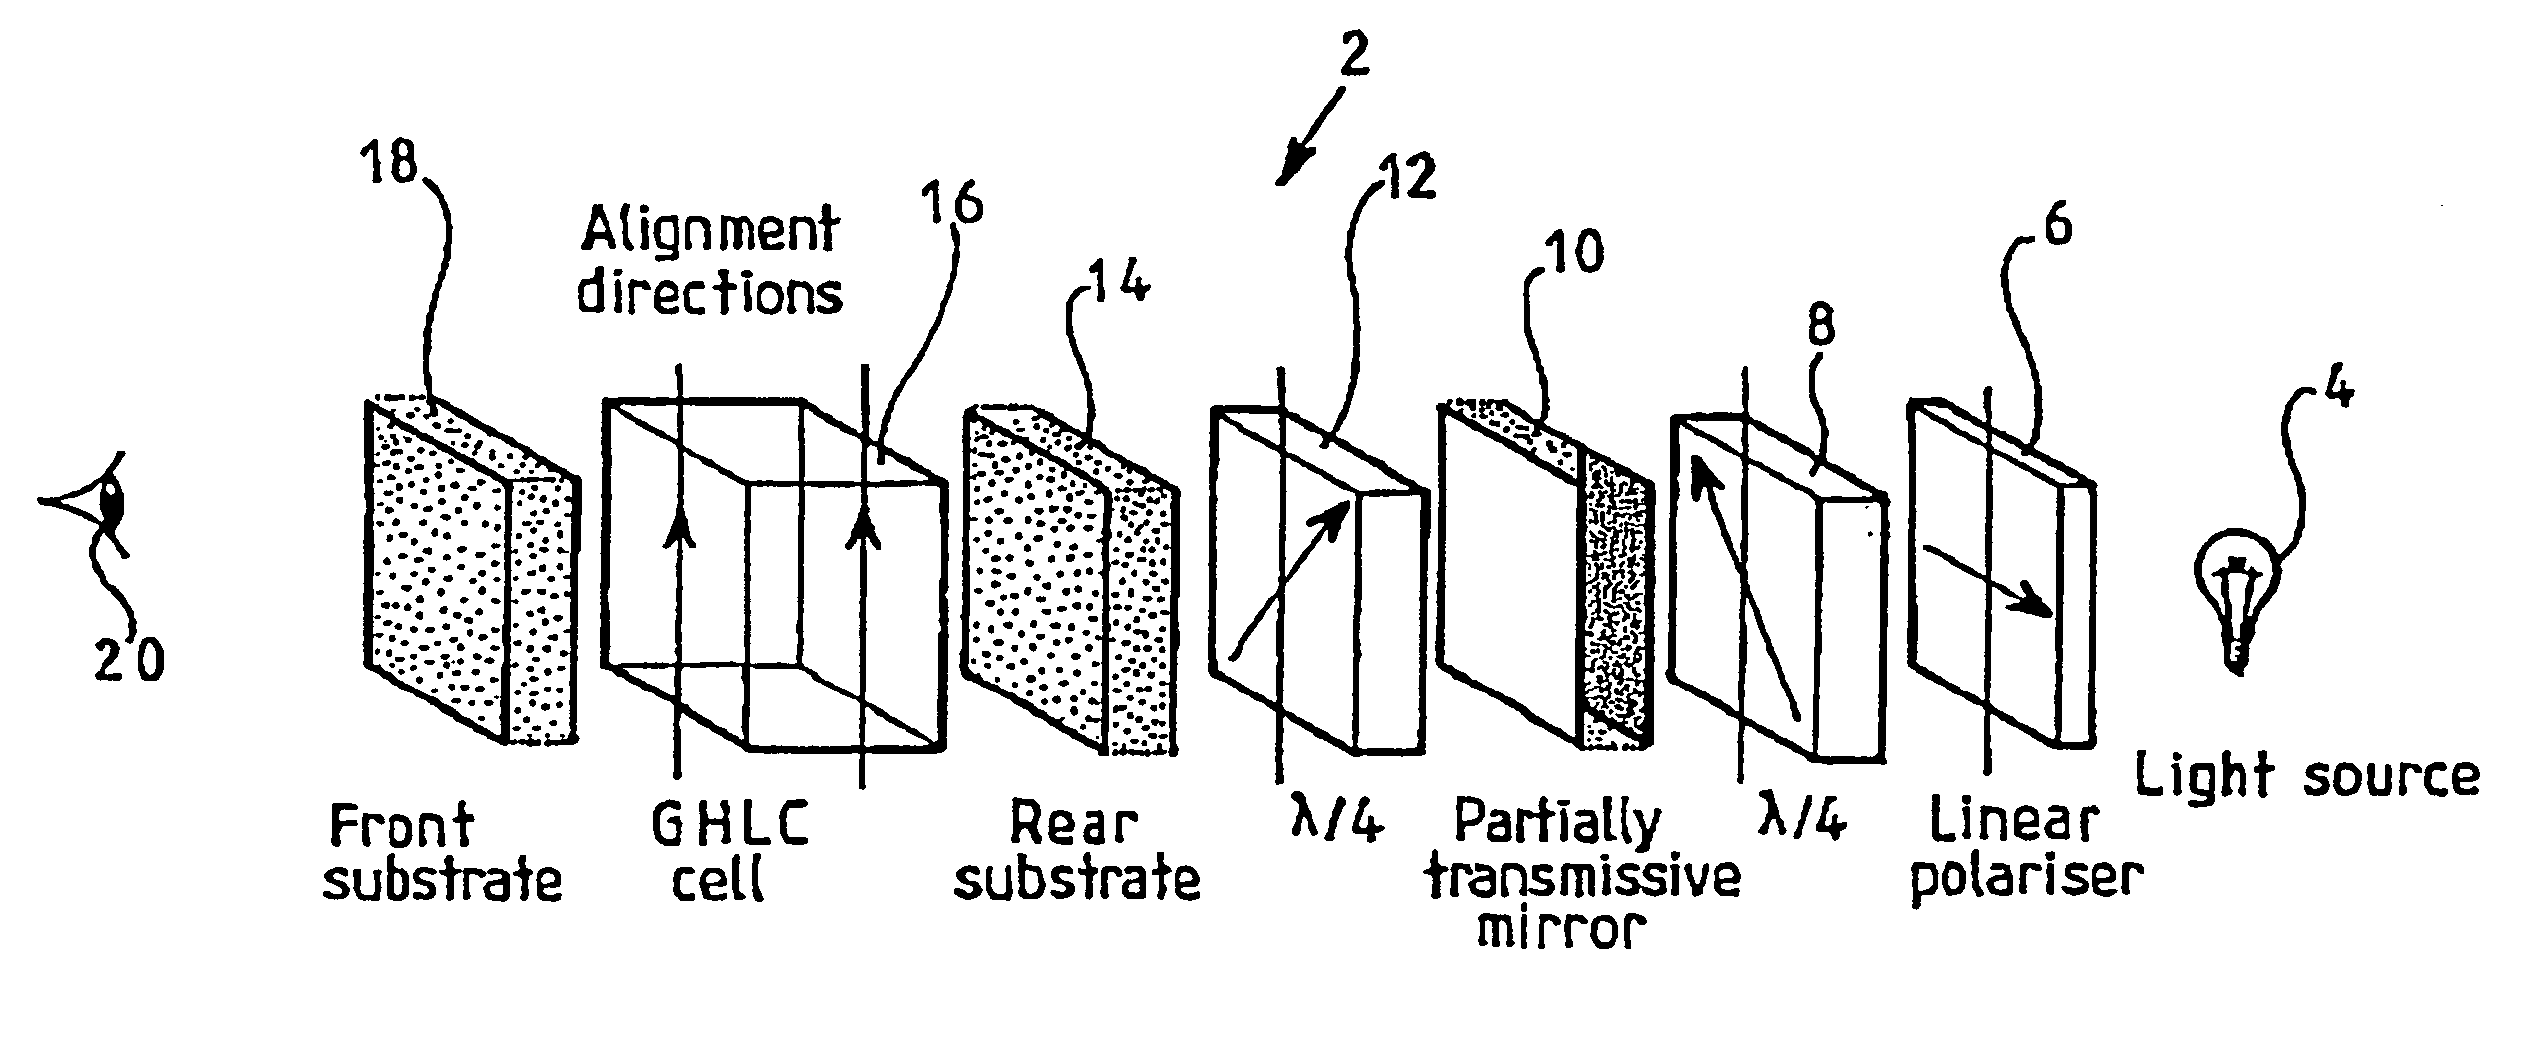 Transflective liquid crystal displays